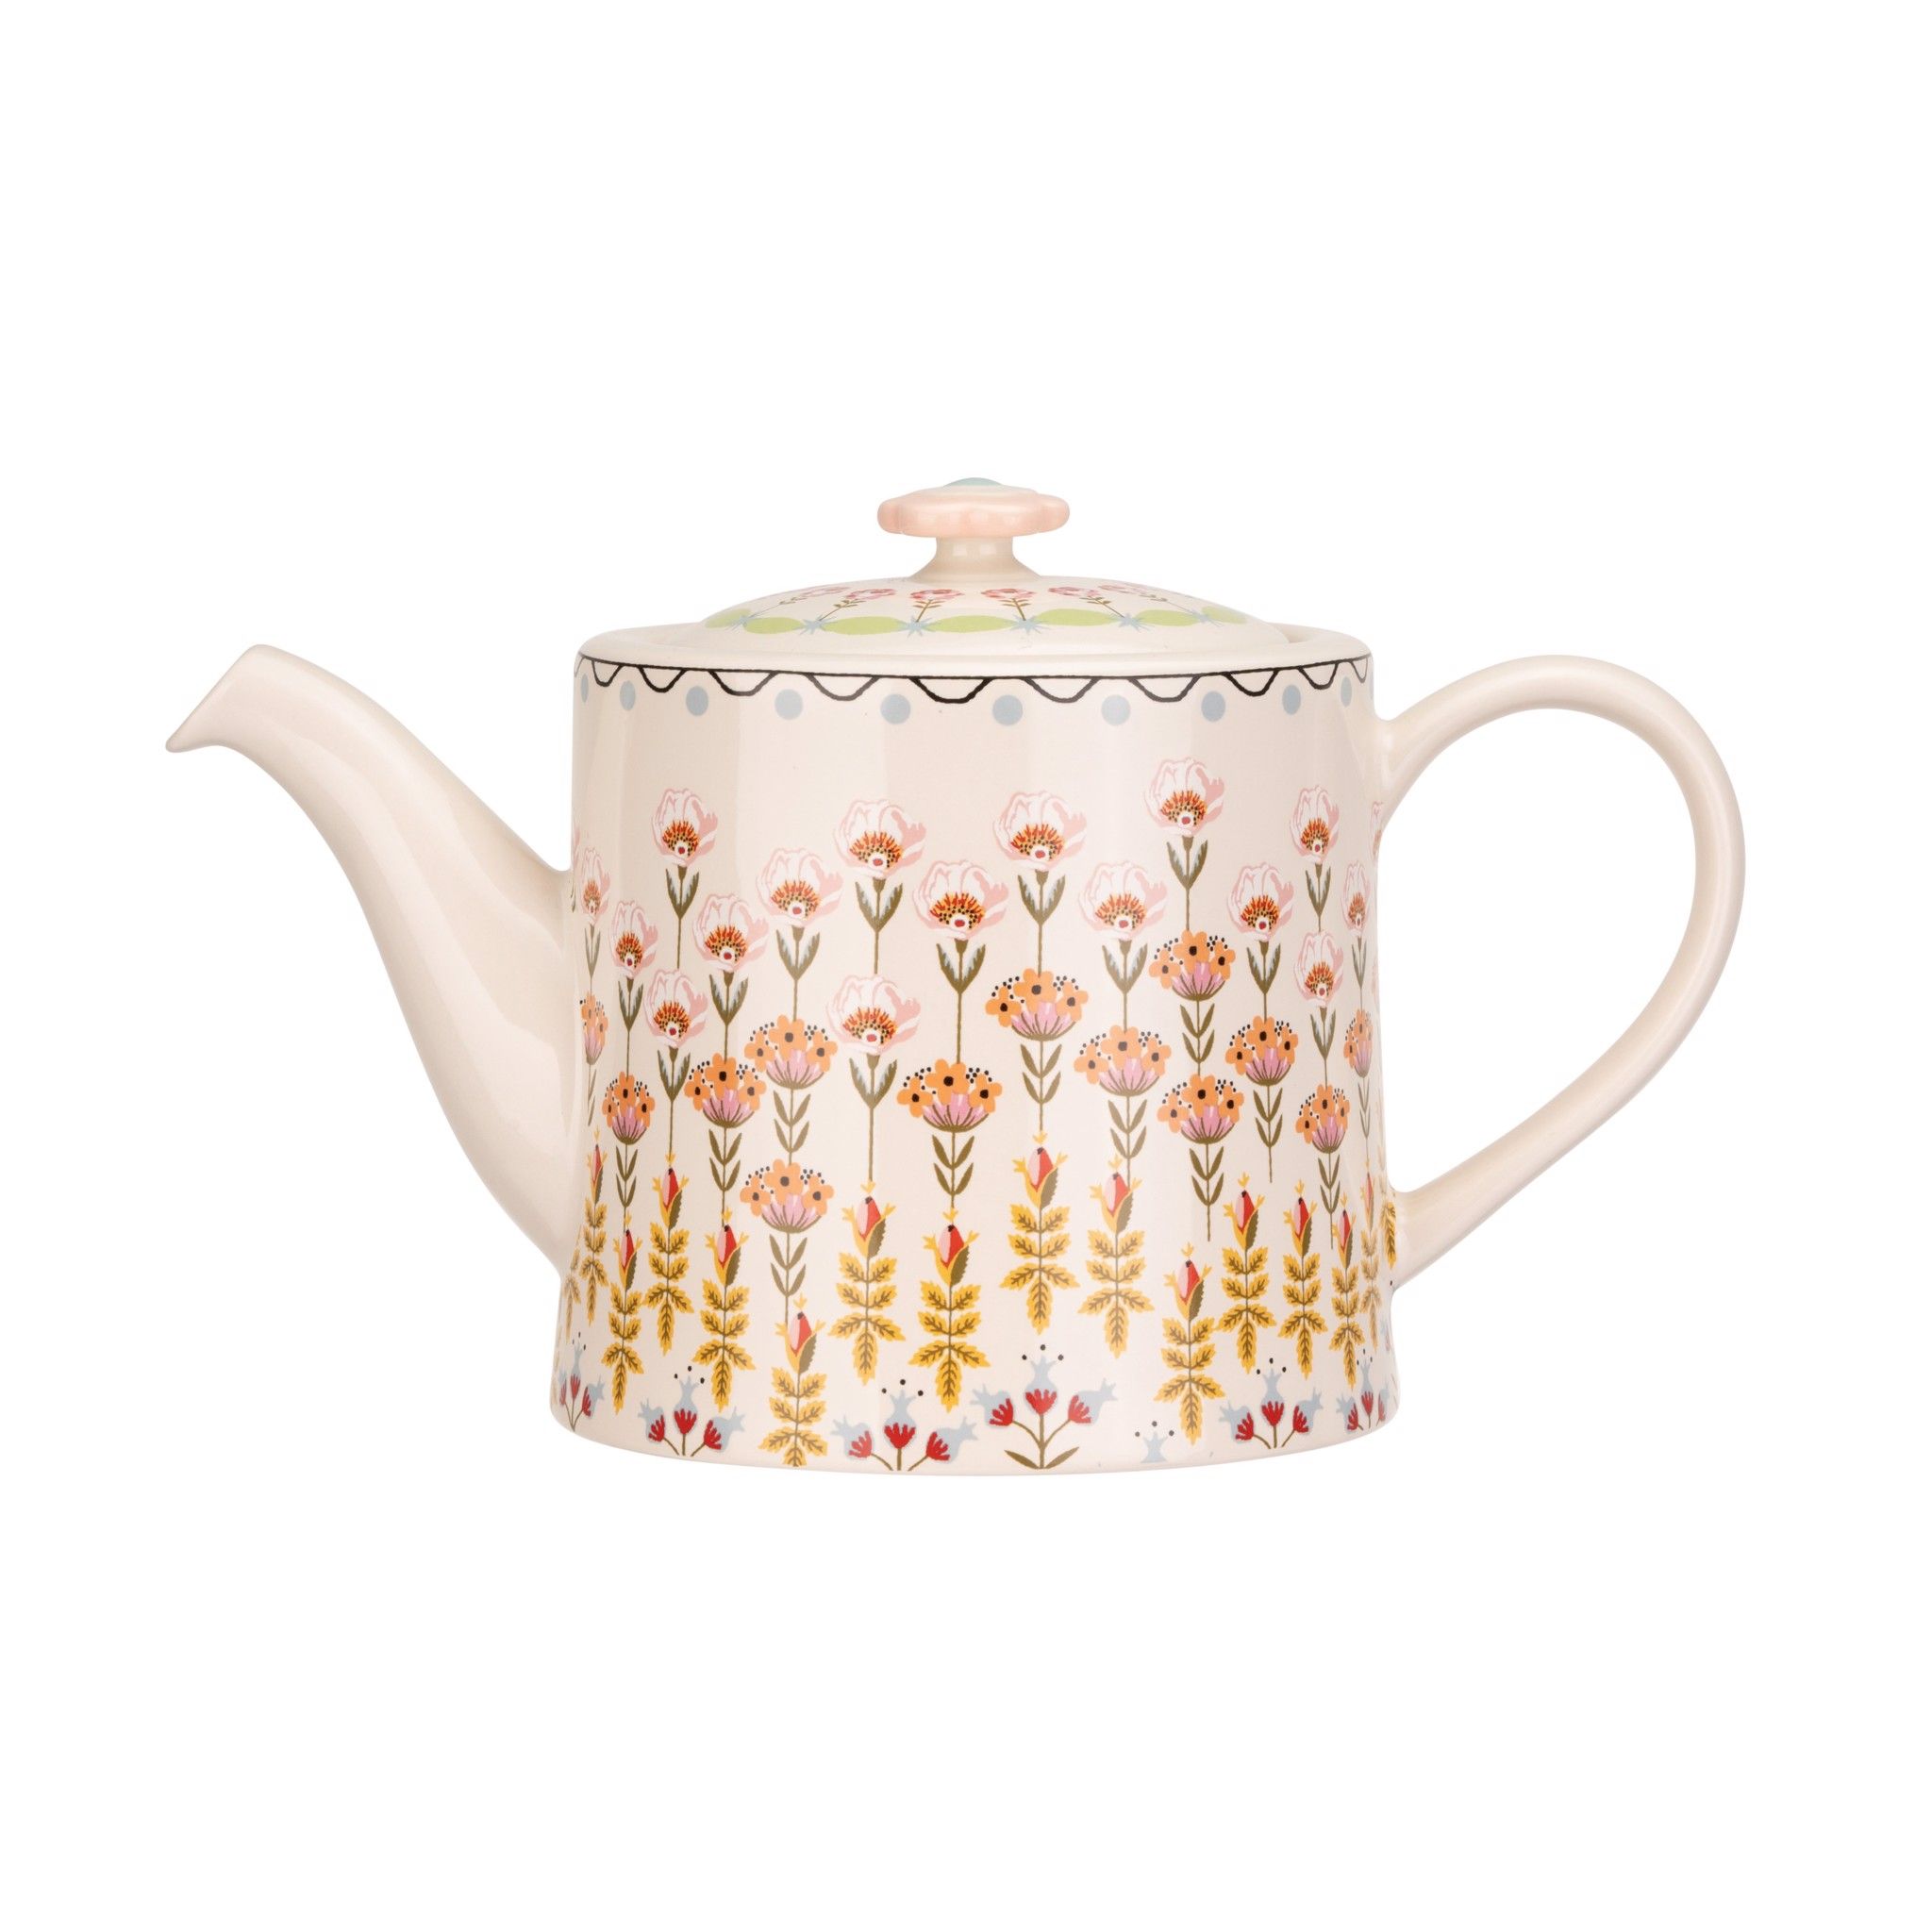  Ấm trà 1 lít/China Range - Painted Table Teapot 1 Litre - Multi 